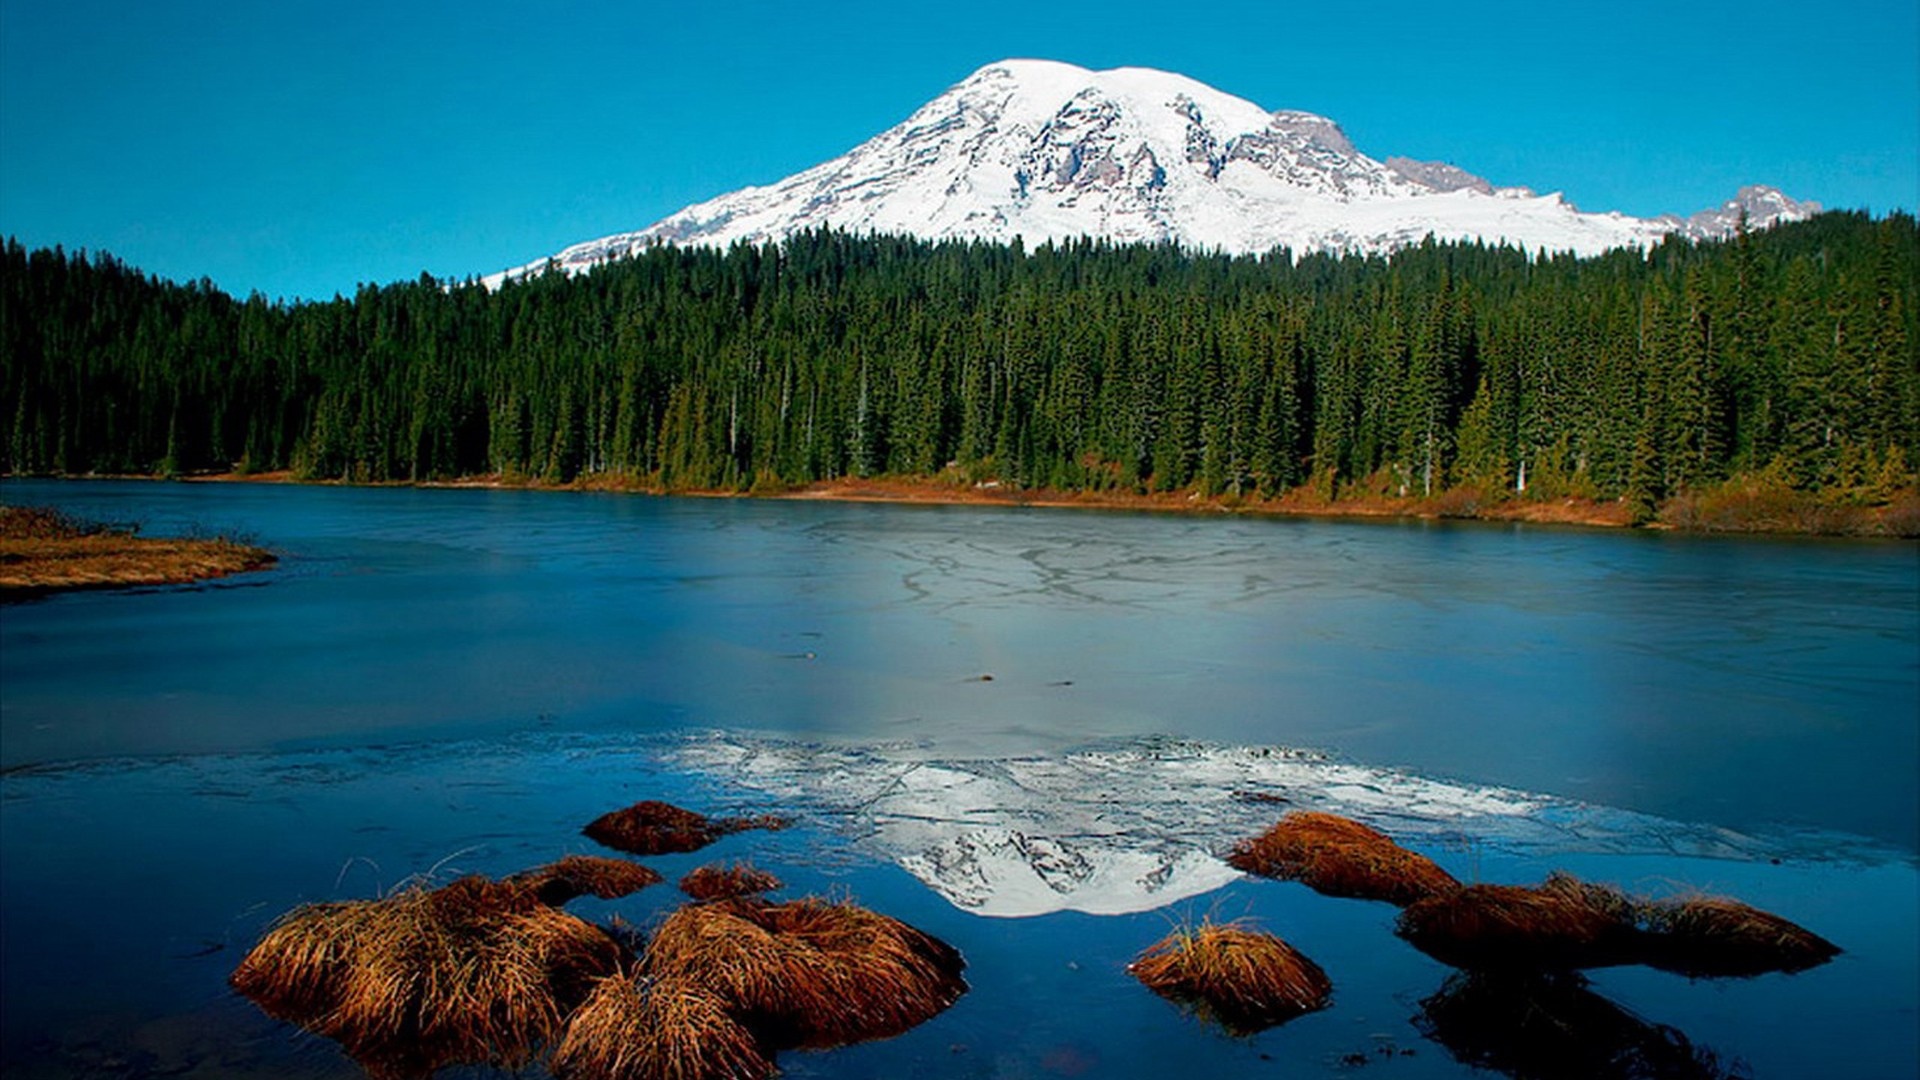 Mount Rainier, Nature's wonderland, Snowy mountains, Serene forests, 1920x1080 Full HD Desktop